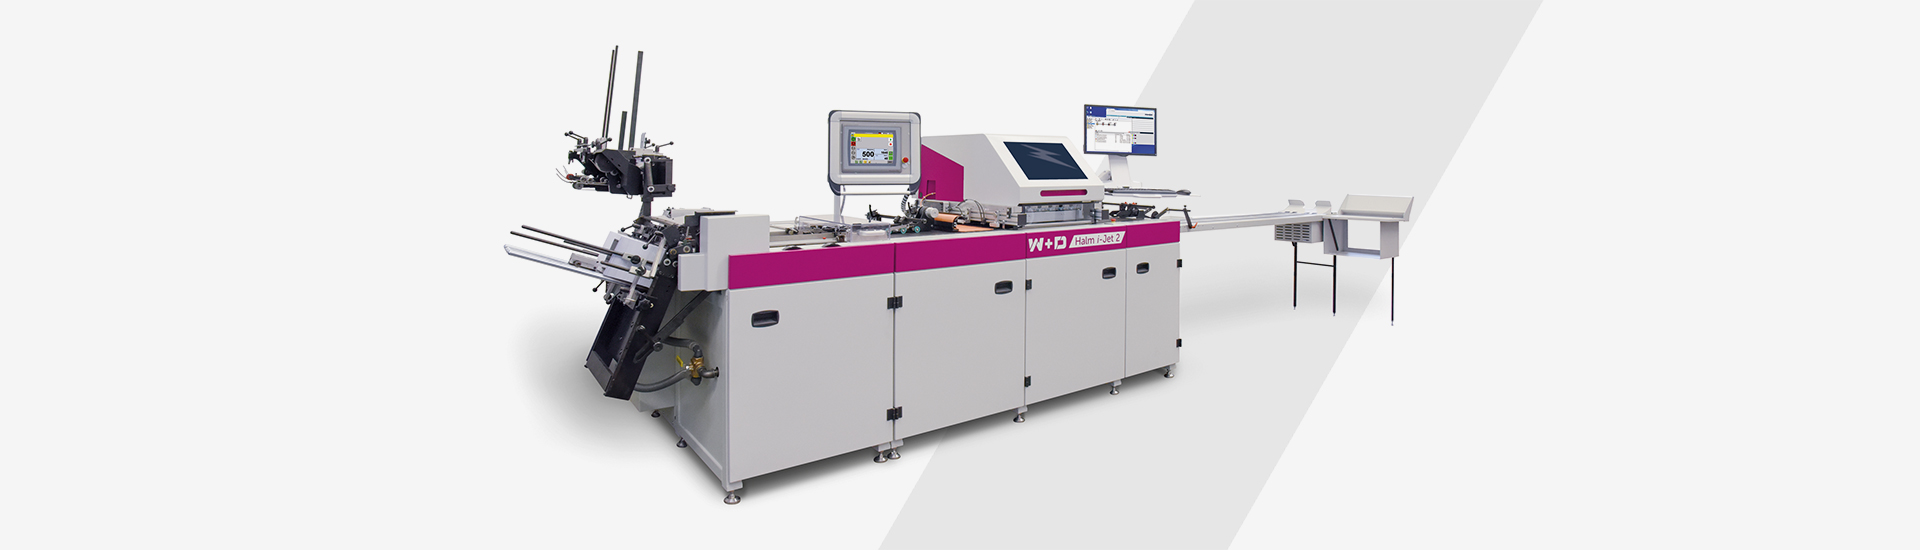 Digital inkjet printing machine W+D Halm iJet